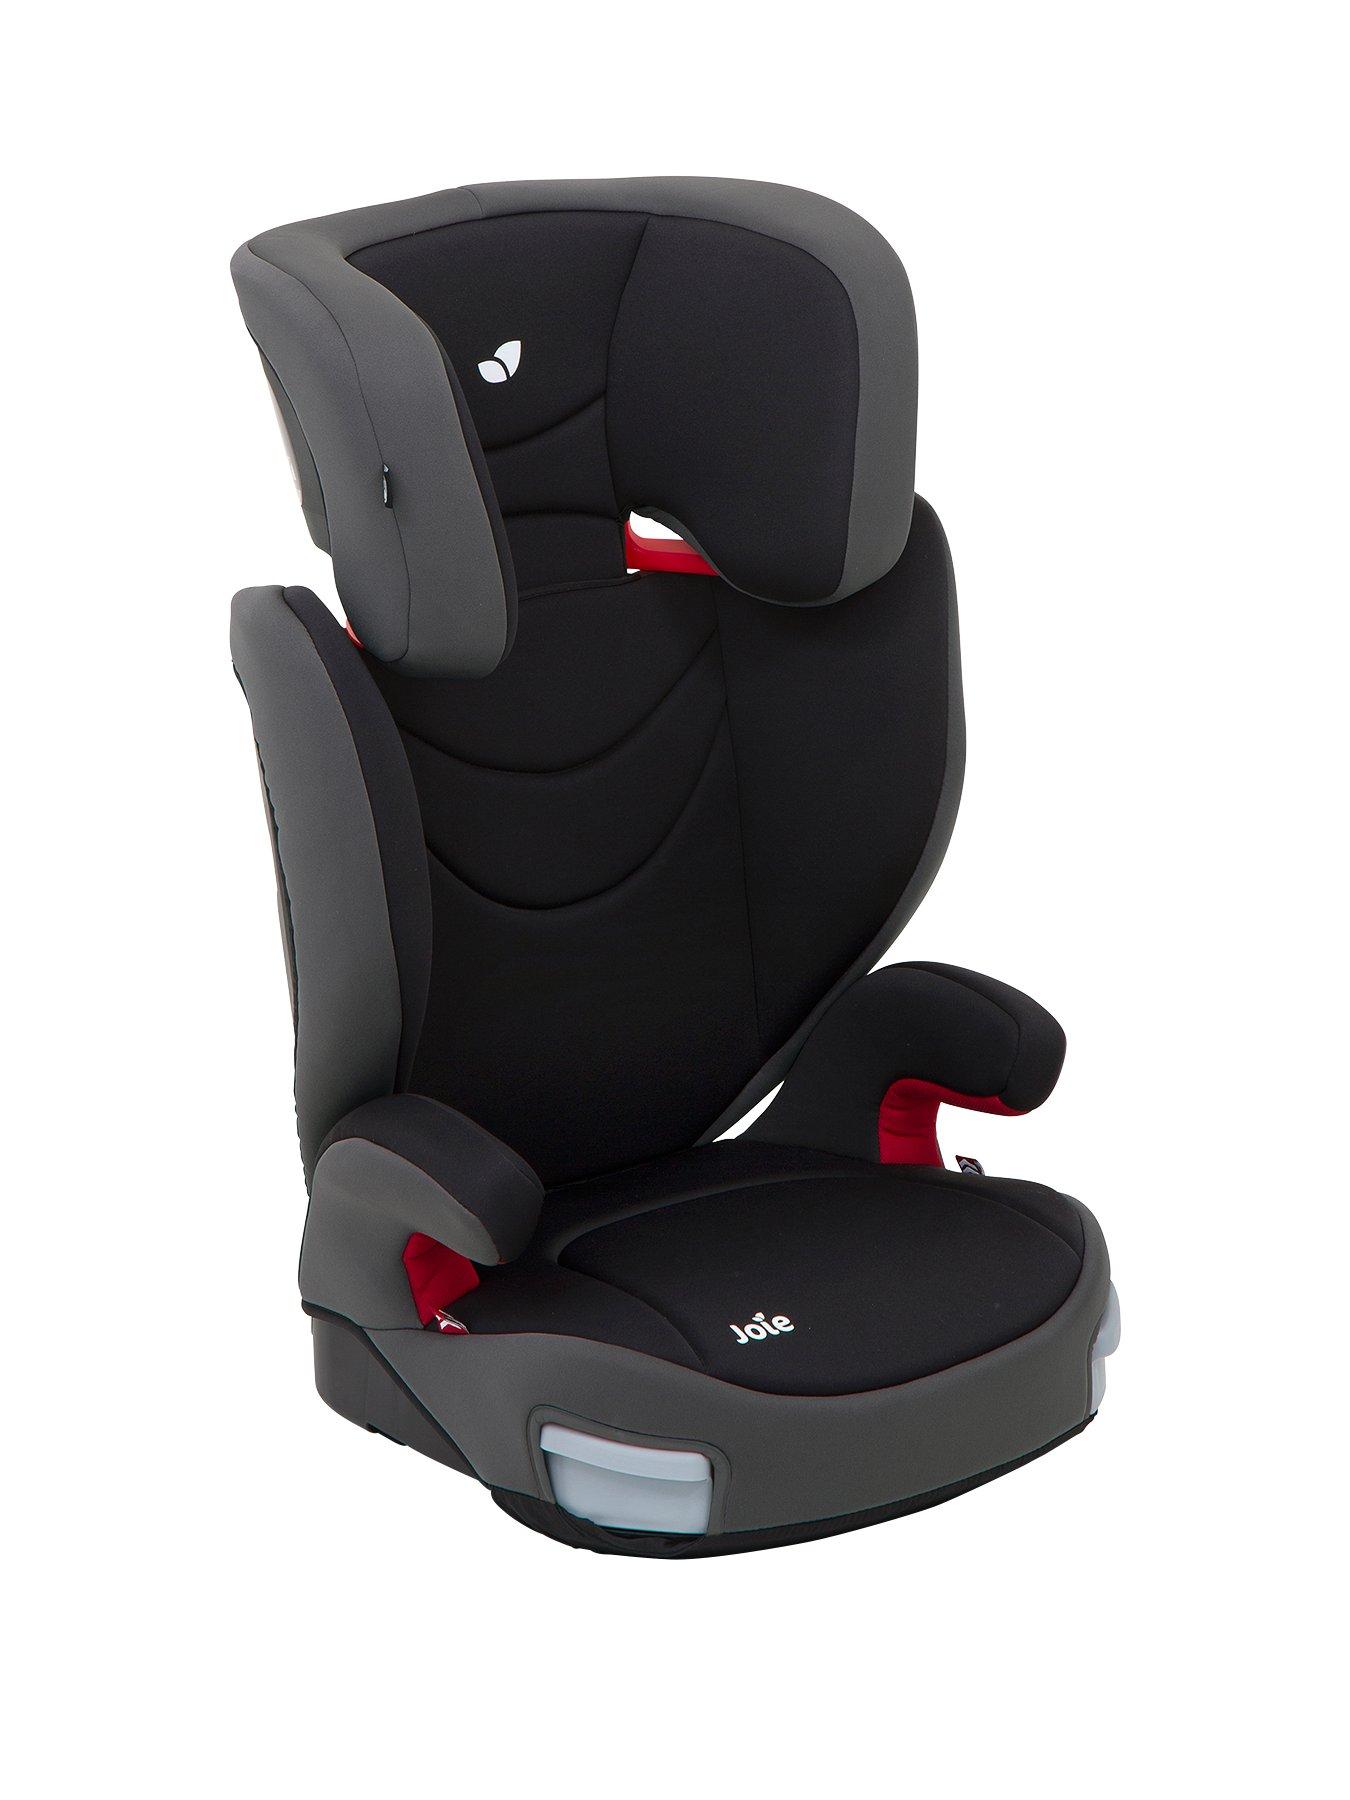 isofix 123 car seats uk